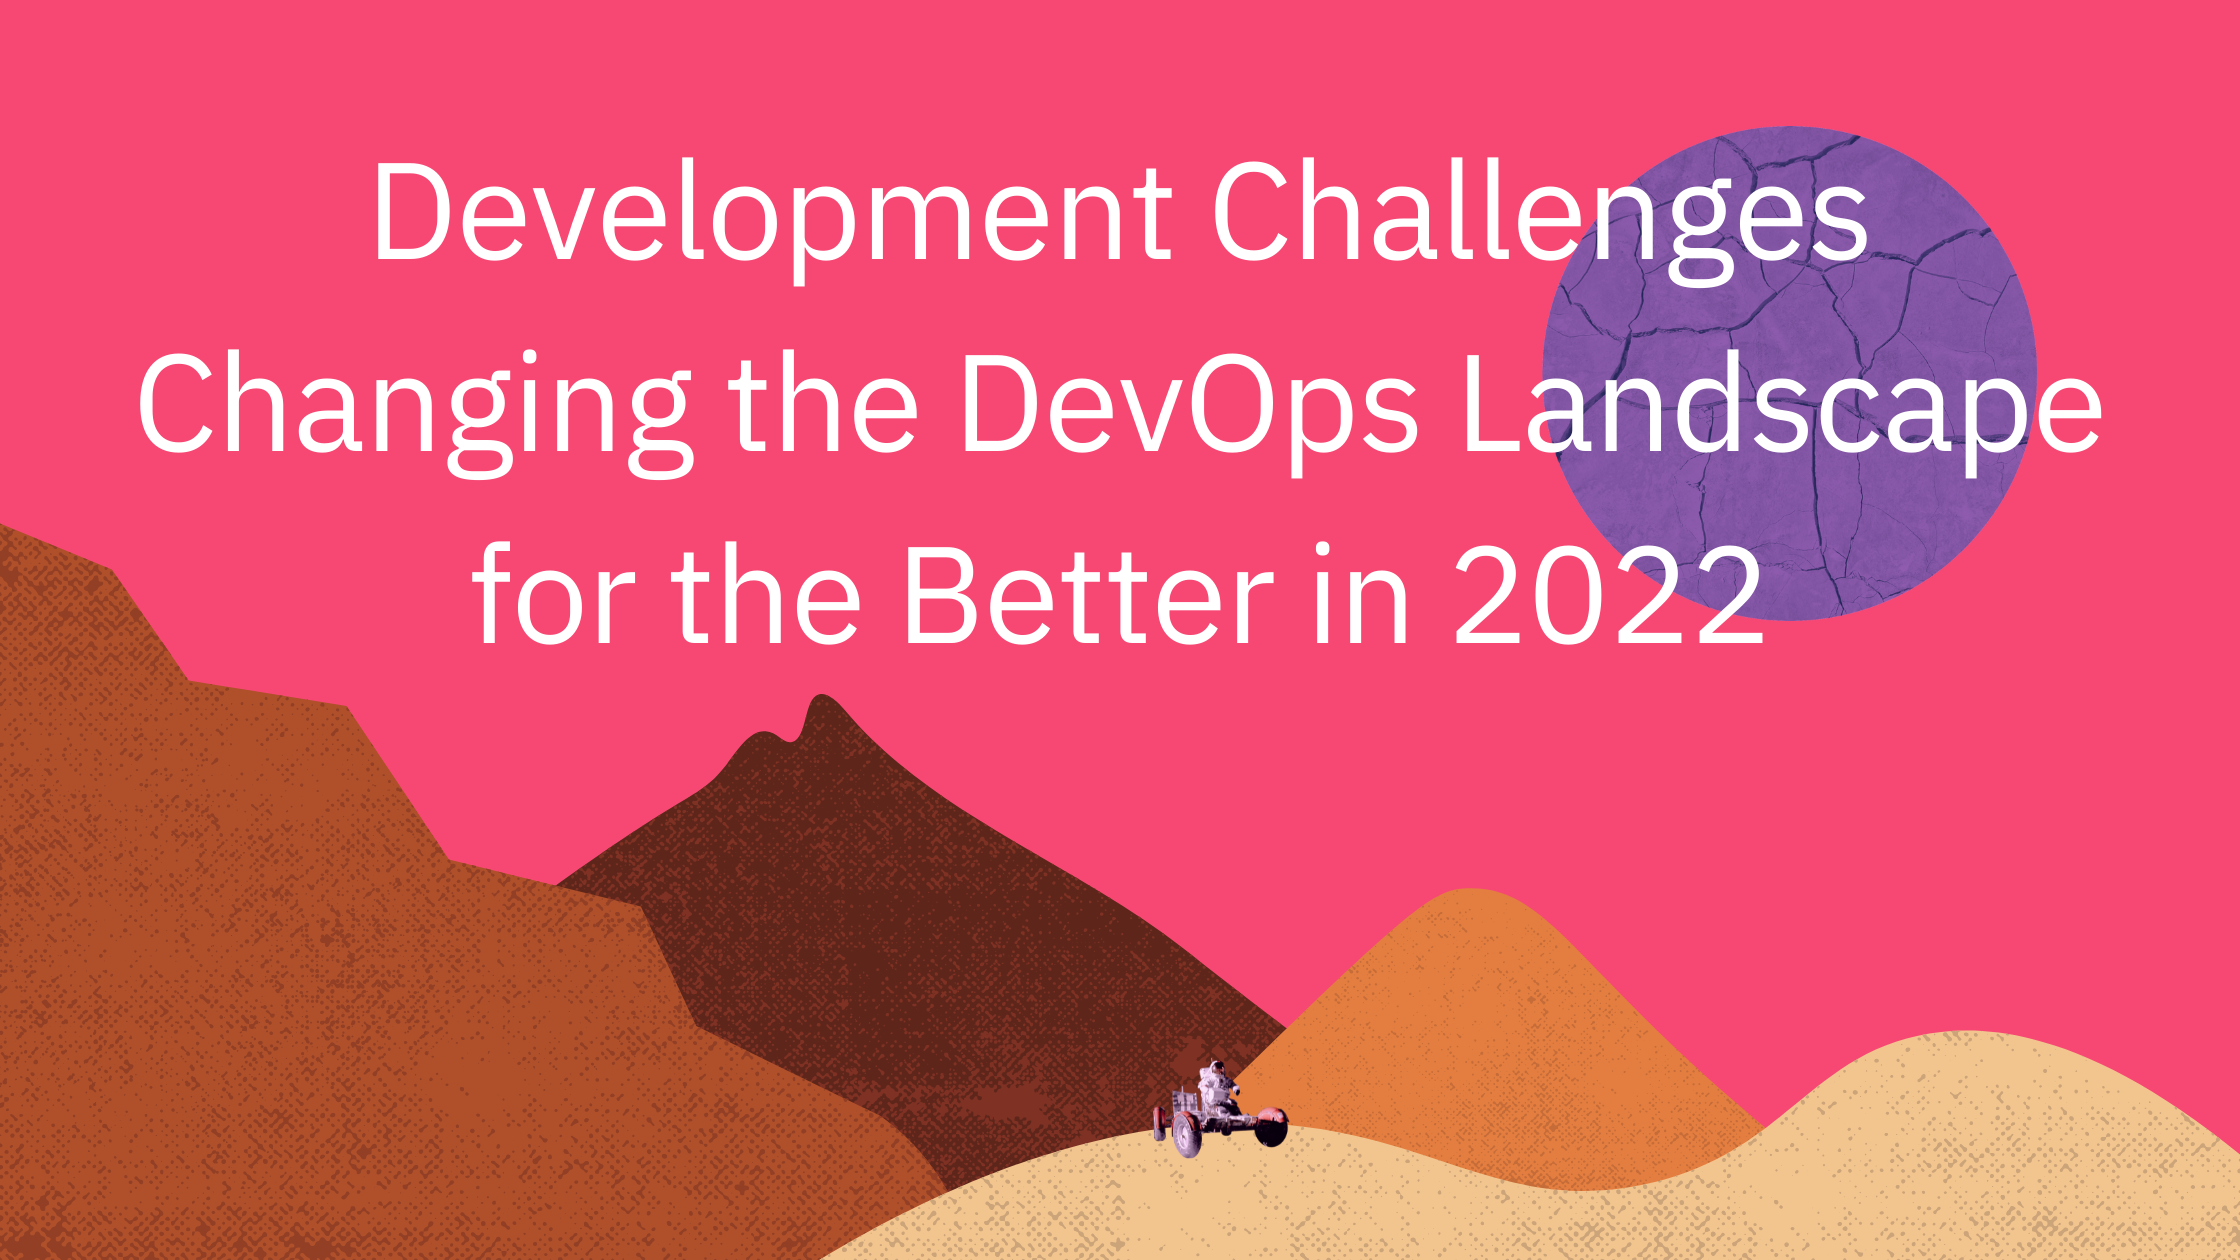 Development Challenges Changing the DevOps Landscape in 2022